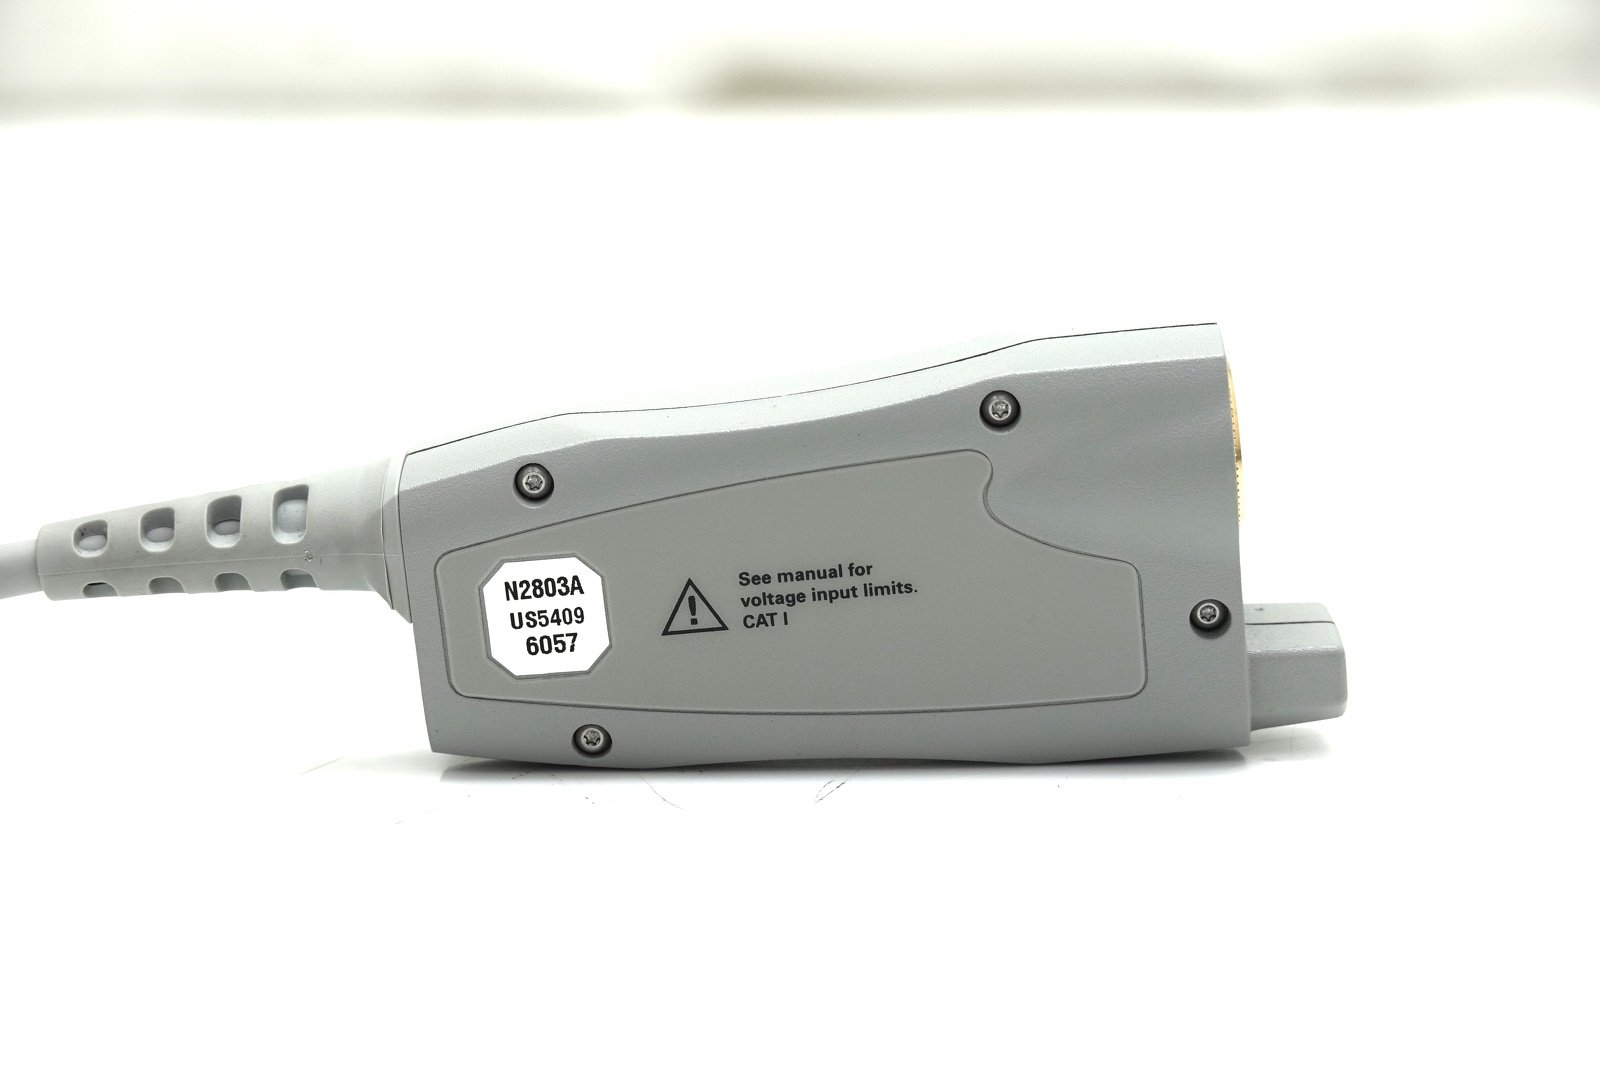 Keysight N2803A InfiniiMax III Series Probe Amplifier / 30GHz